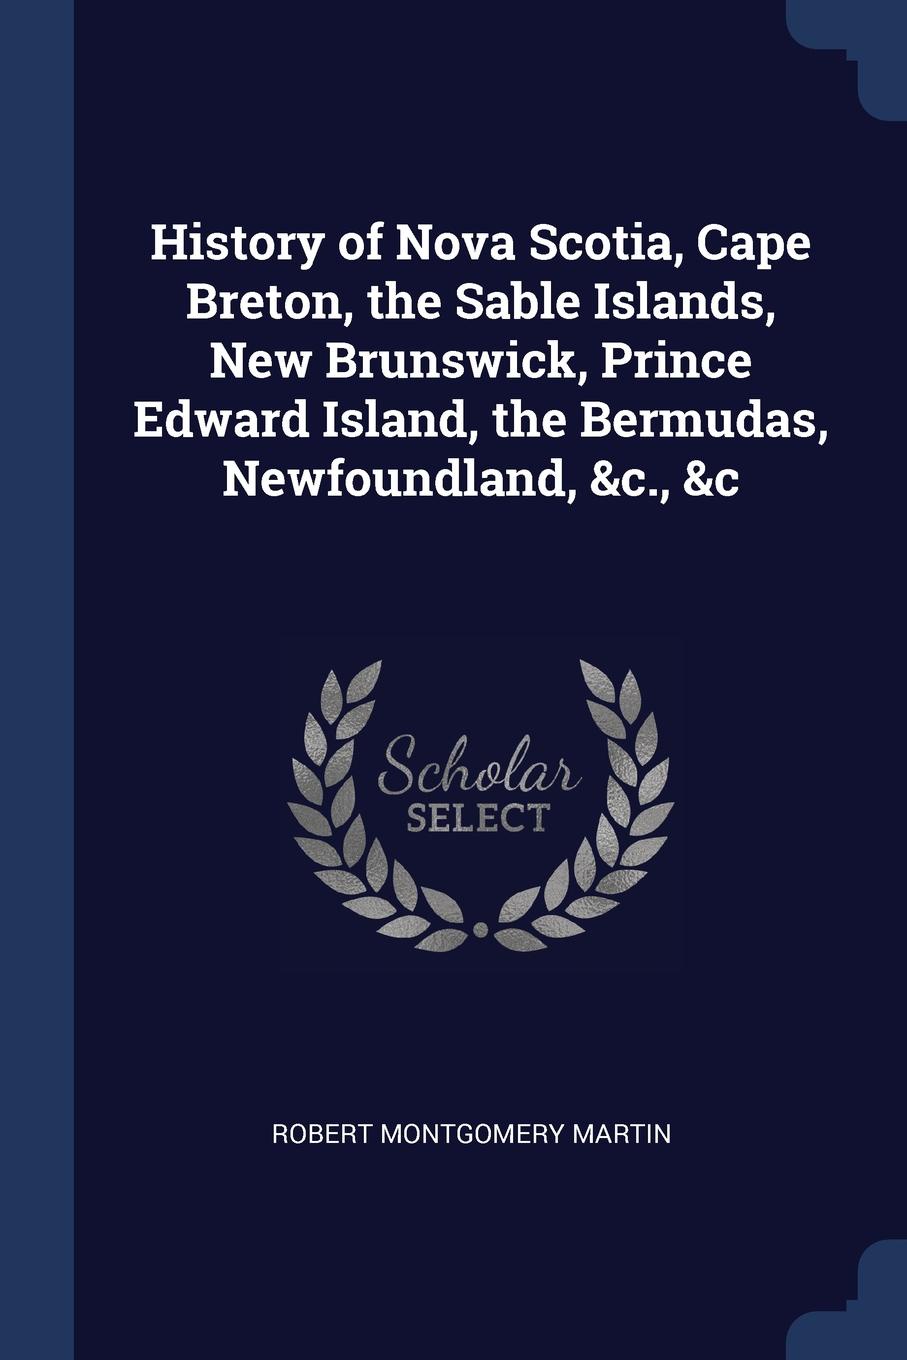 History of Nova Scotia, Cape Breton, the Sable Islands, New Brunswick, Prince Edward Island, the Bermudas, Newfoundland, .c., .c